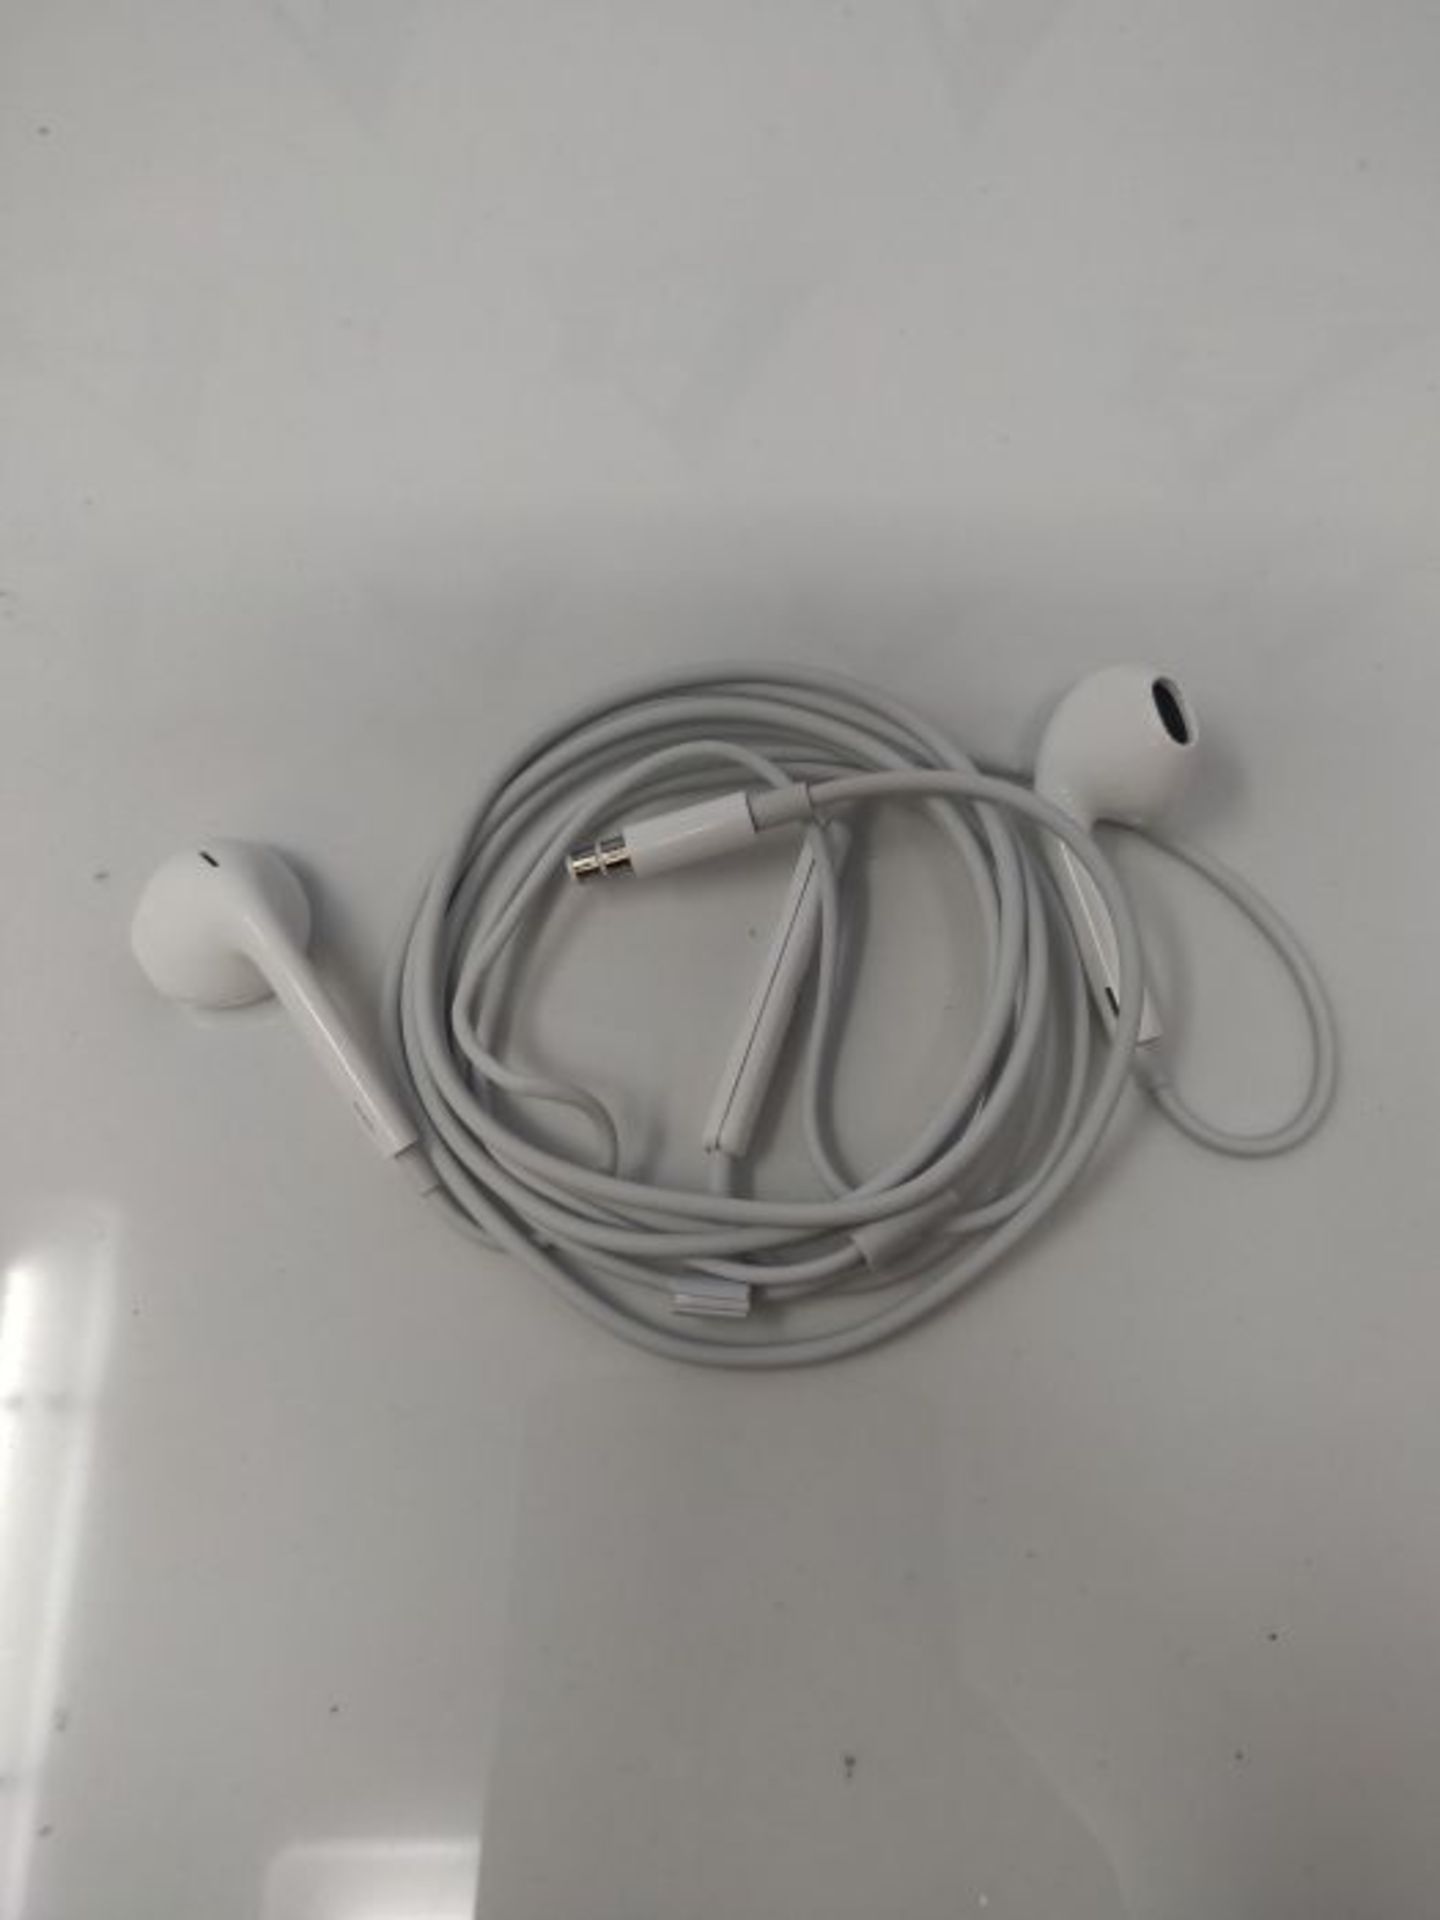 [CRACKED] EarPods with 3.5mm Headphone Plug - Image 3 of 3